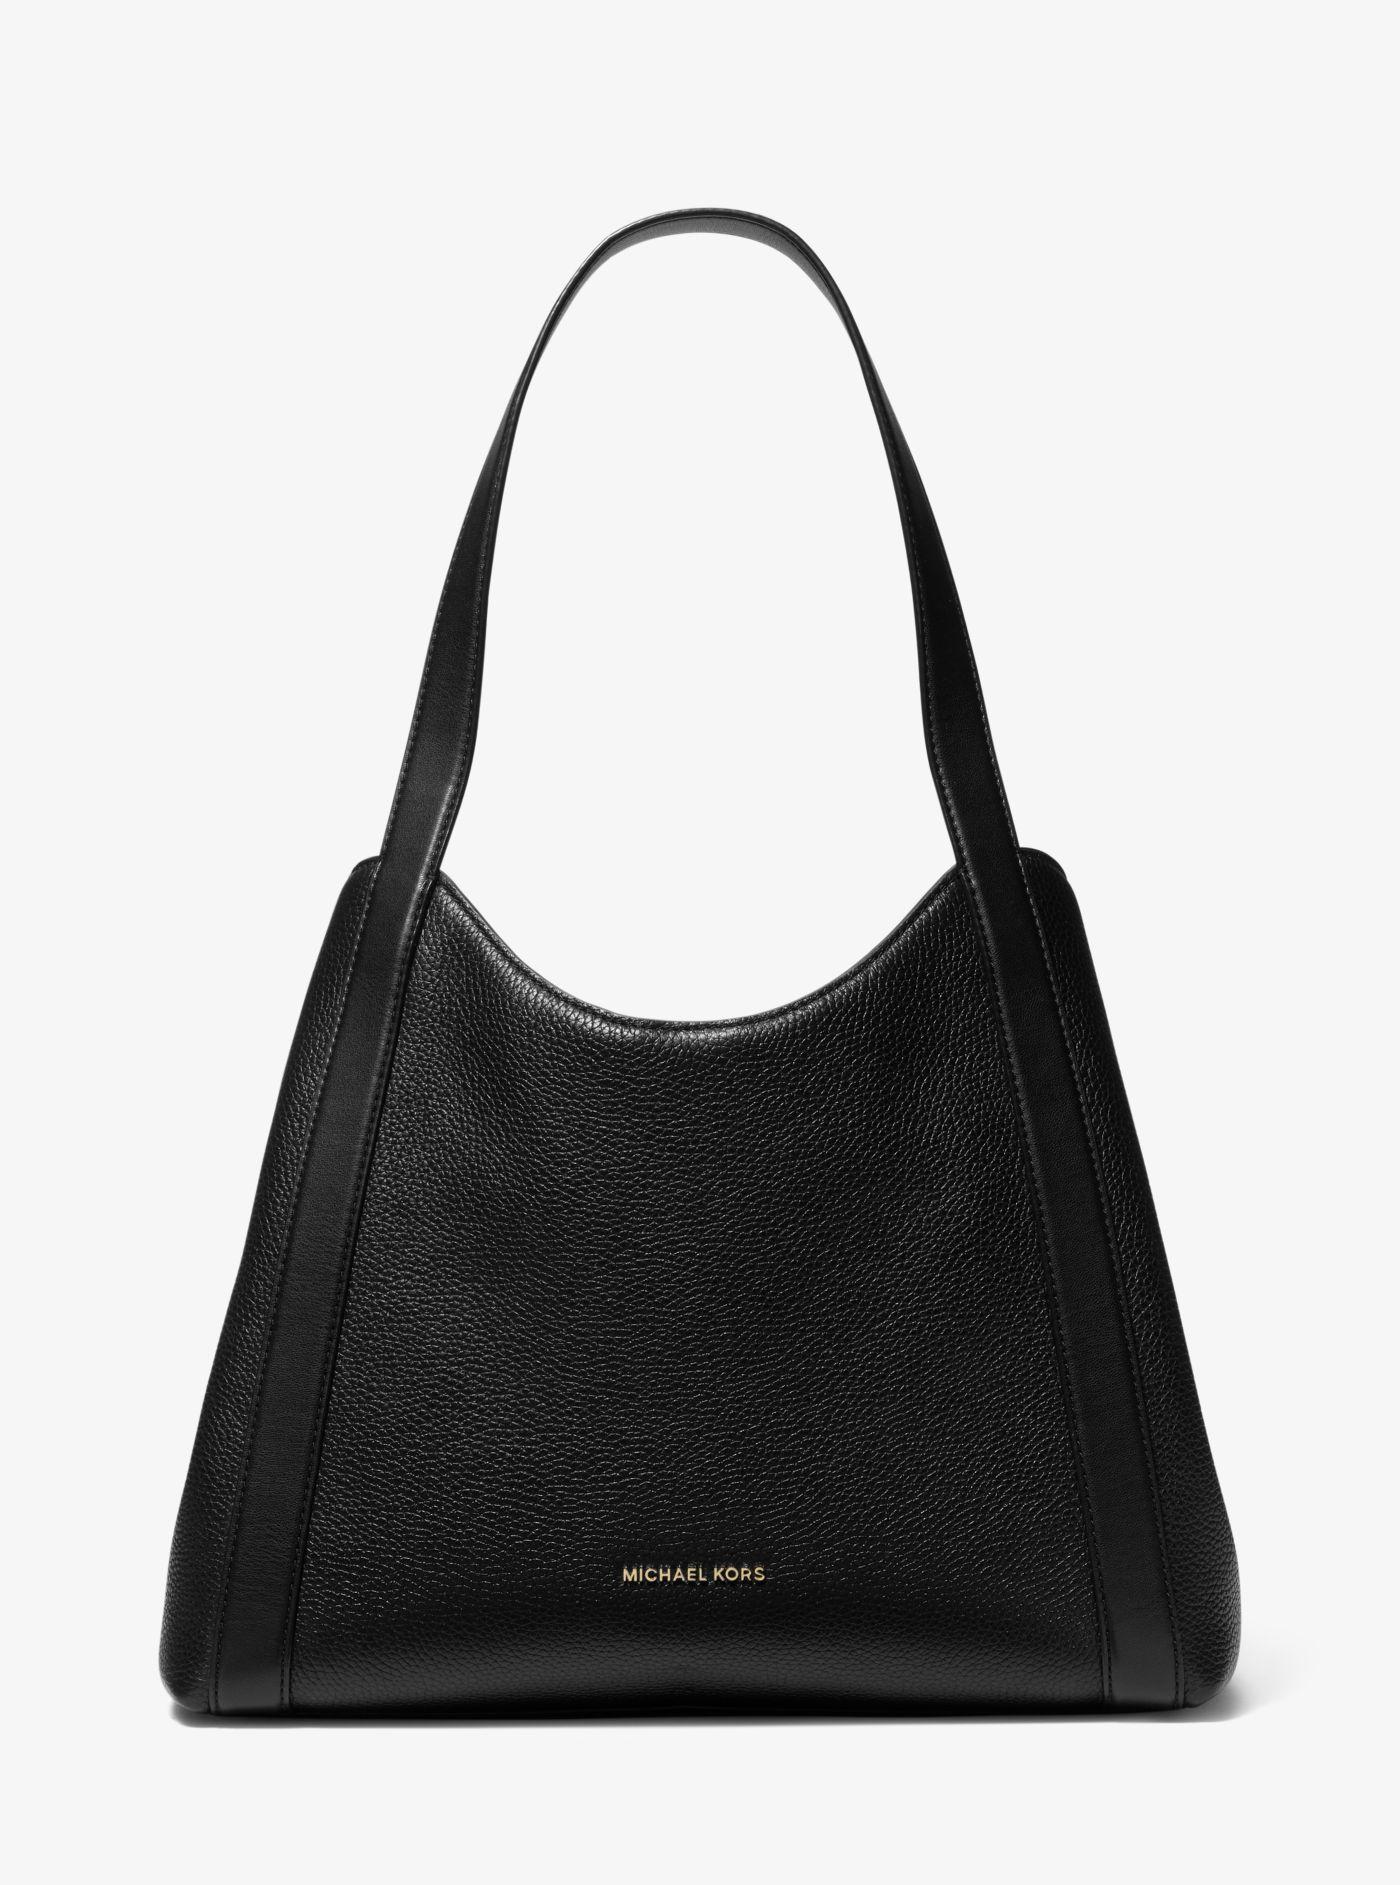 Michael Kors Rosemary Large Pebbled Leather Shoulder Bag in Black | Lyst